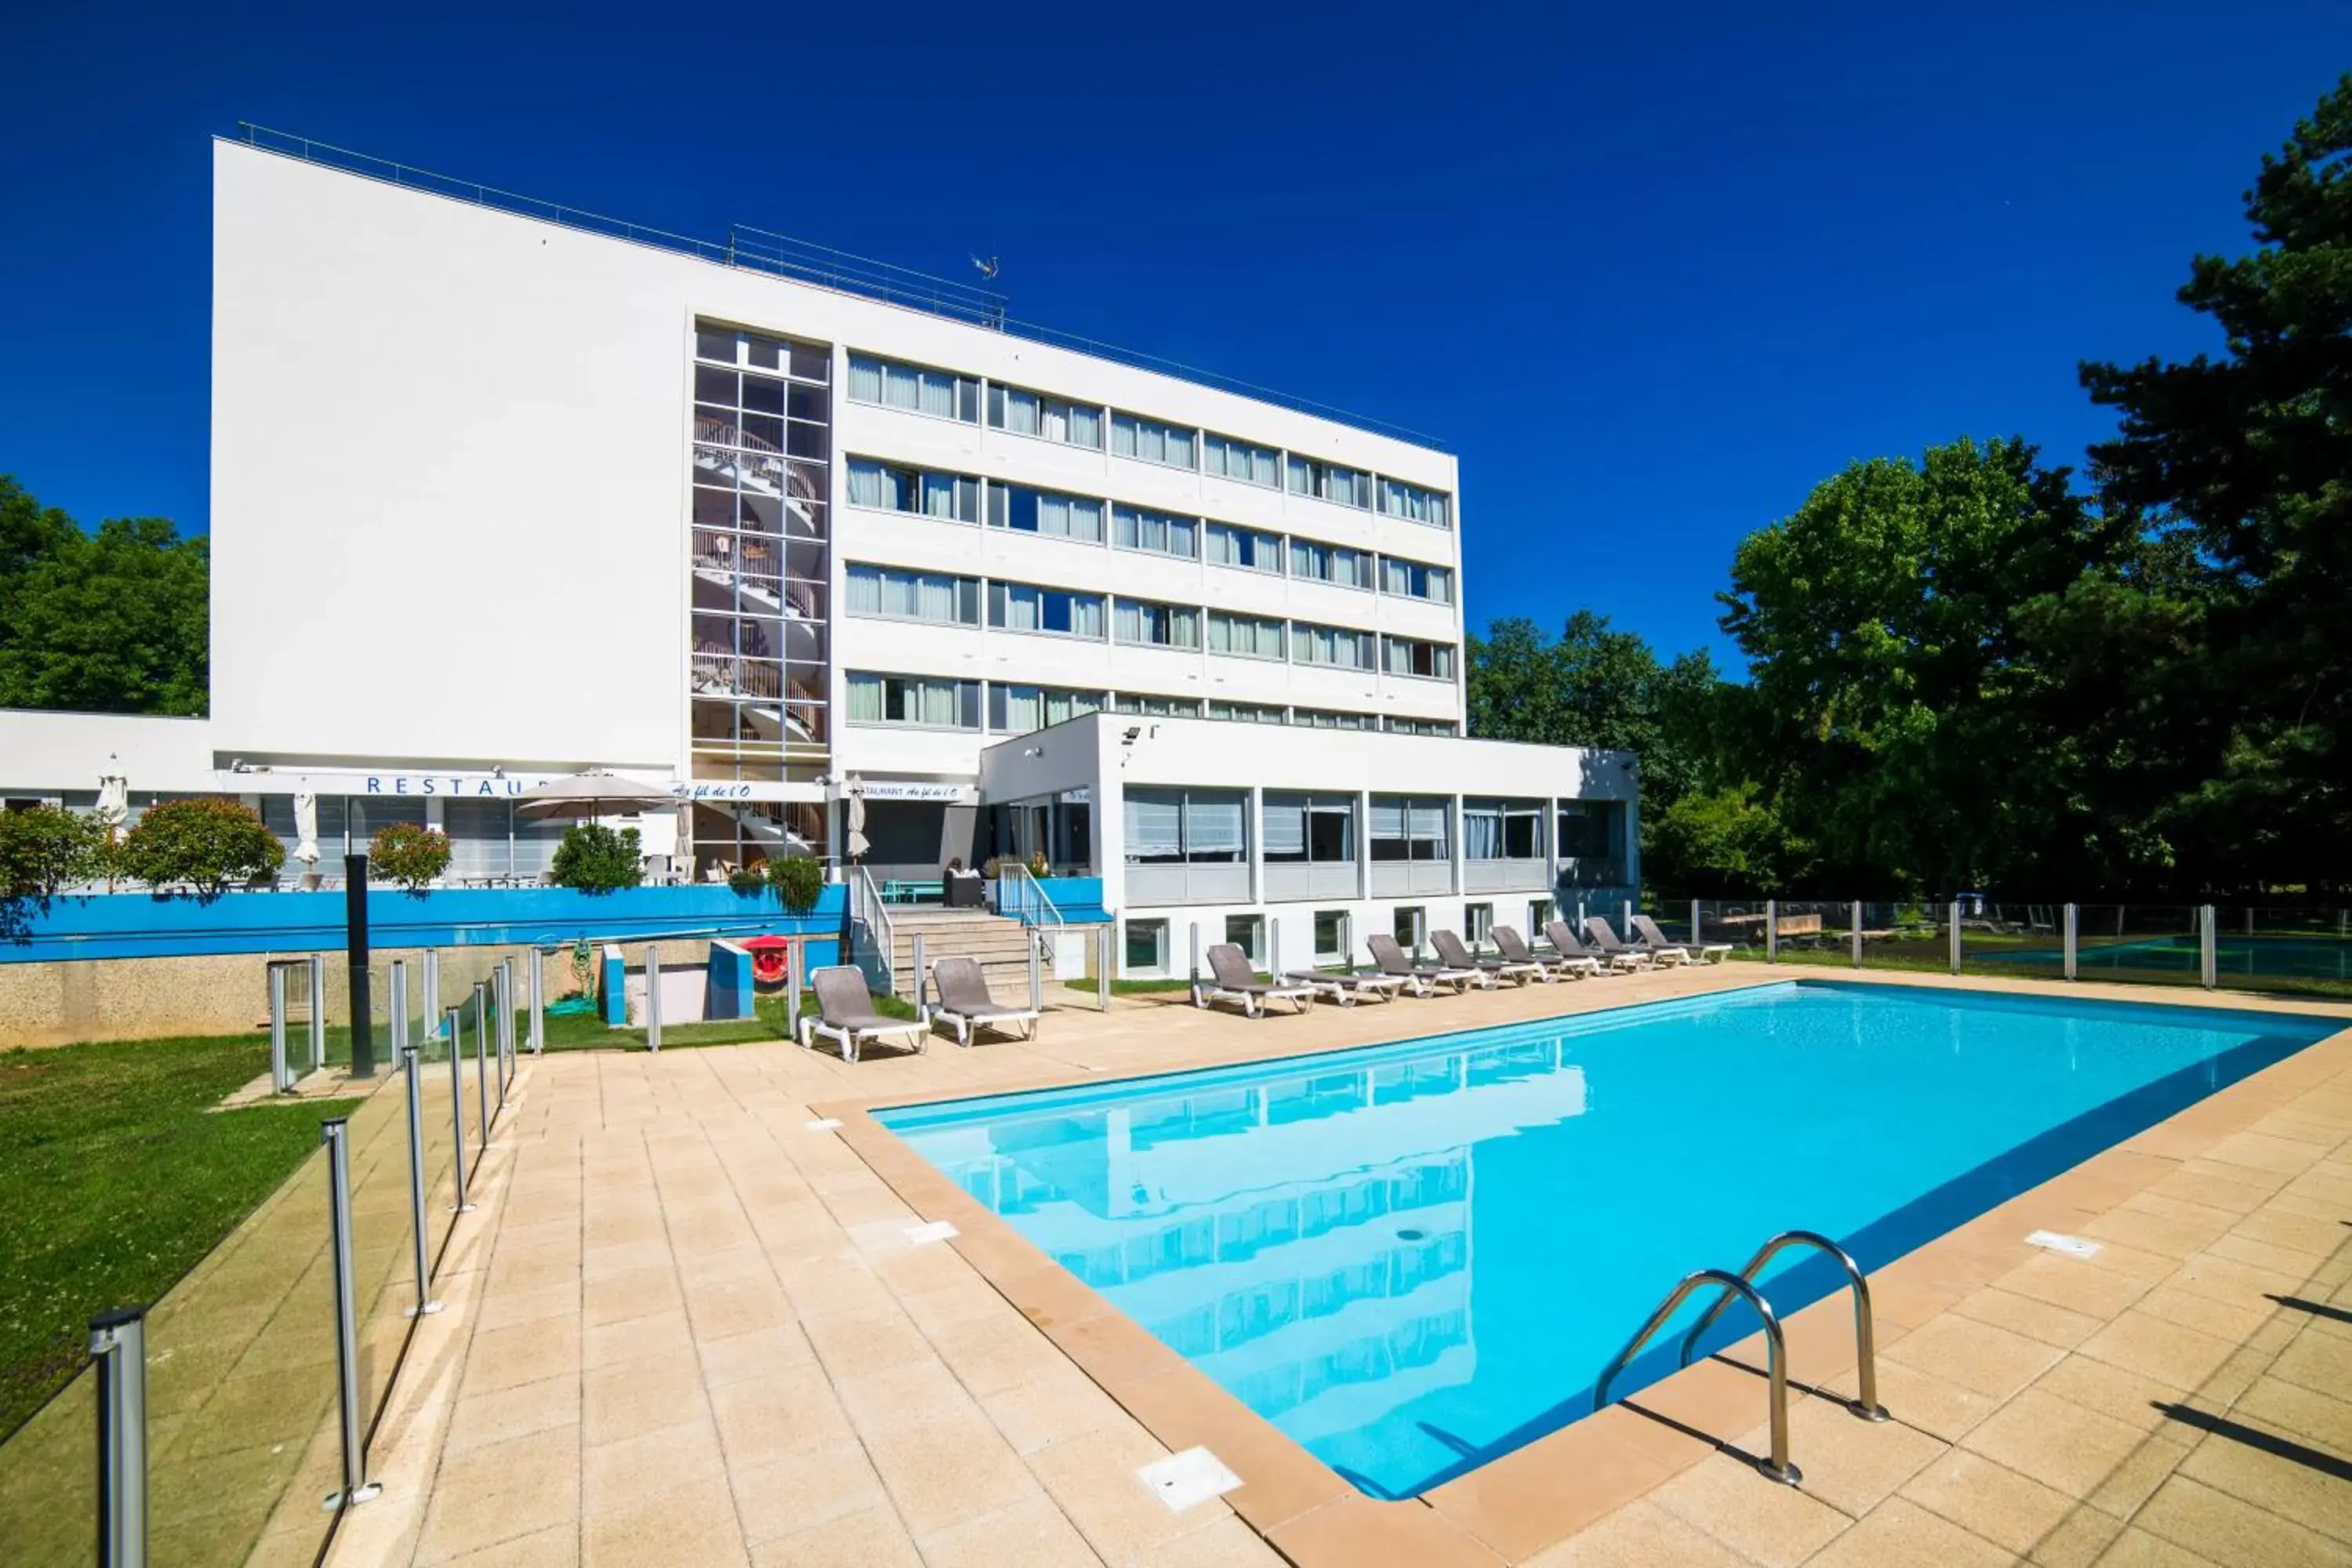 Property building, Swimming Pool in Hôtel Mercure Mâcon Bord de Saône